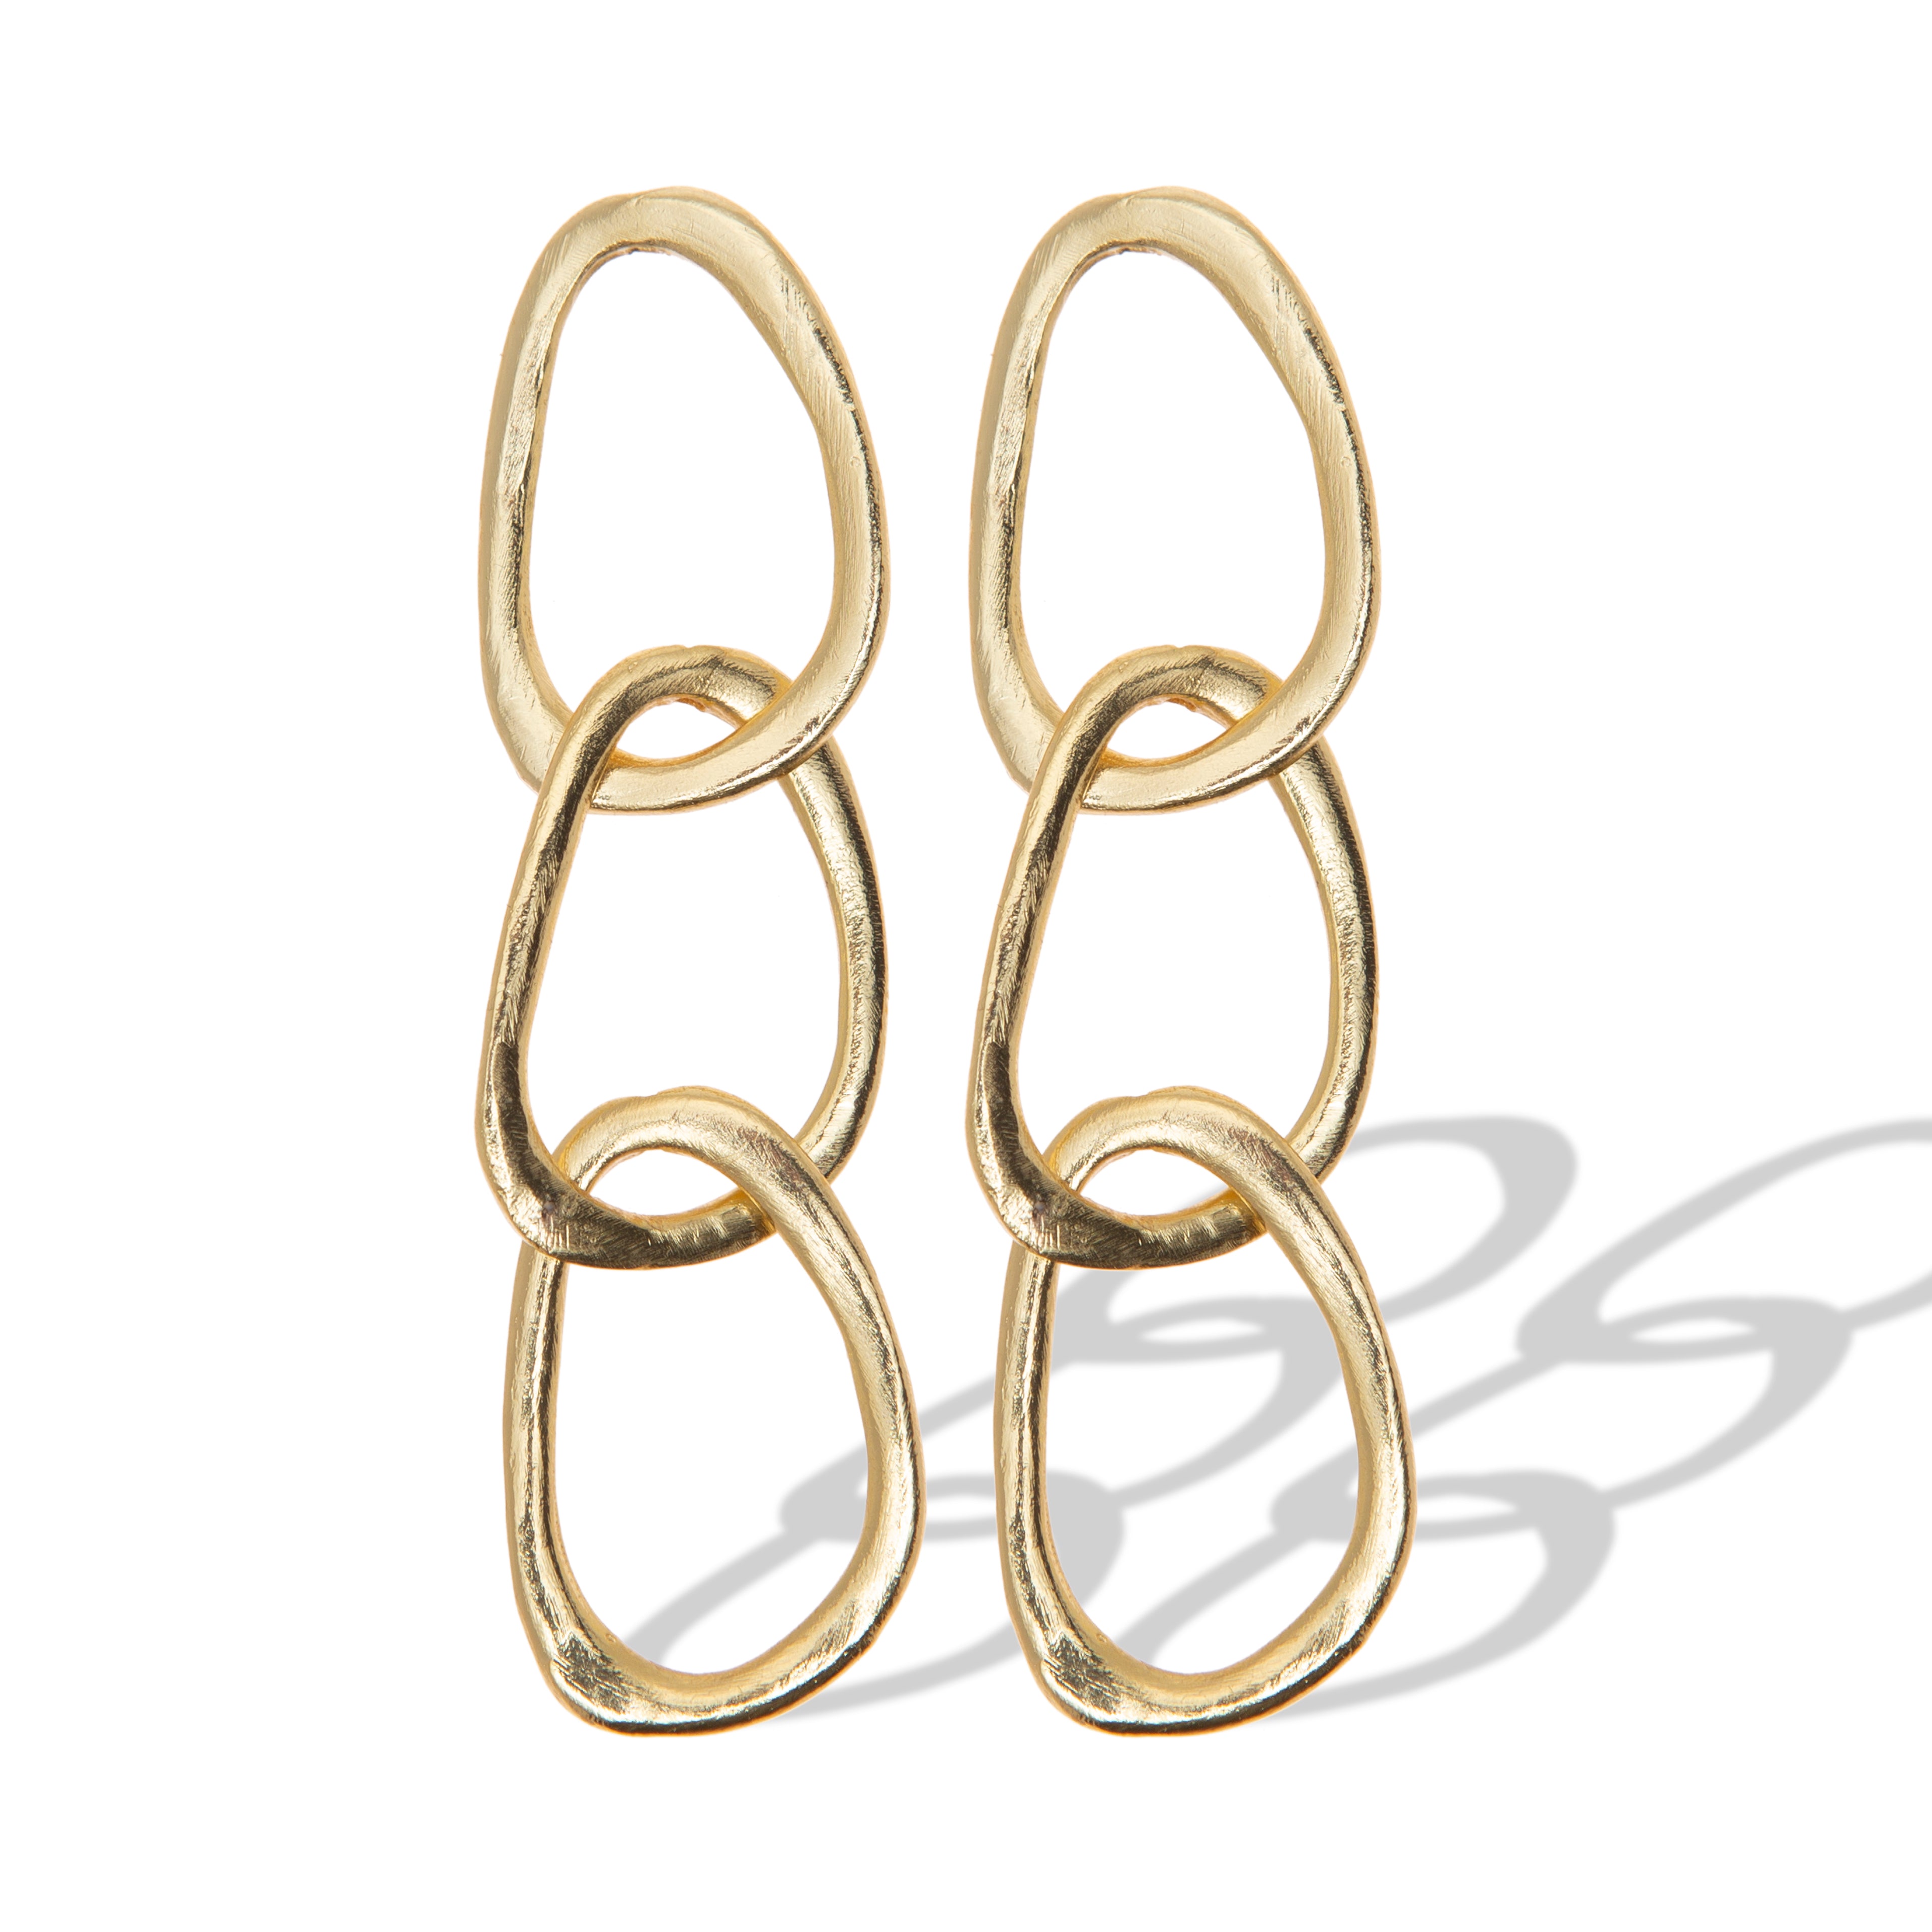 Gold plated brass earrings